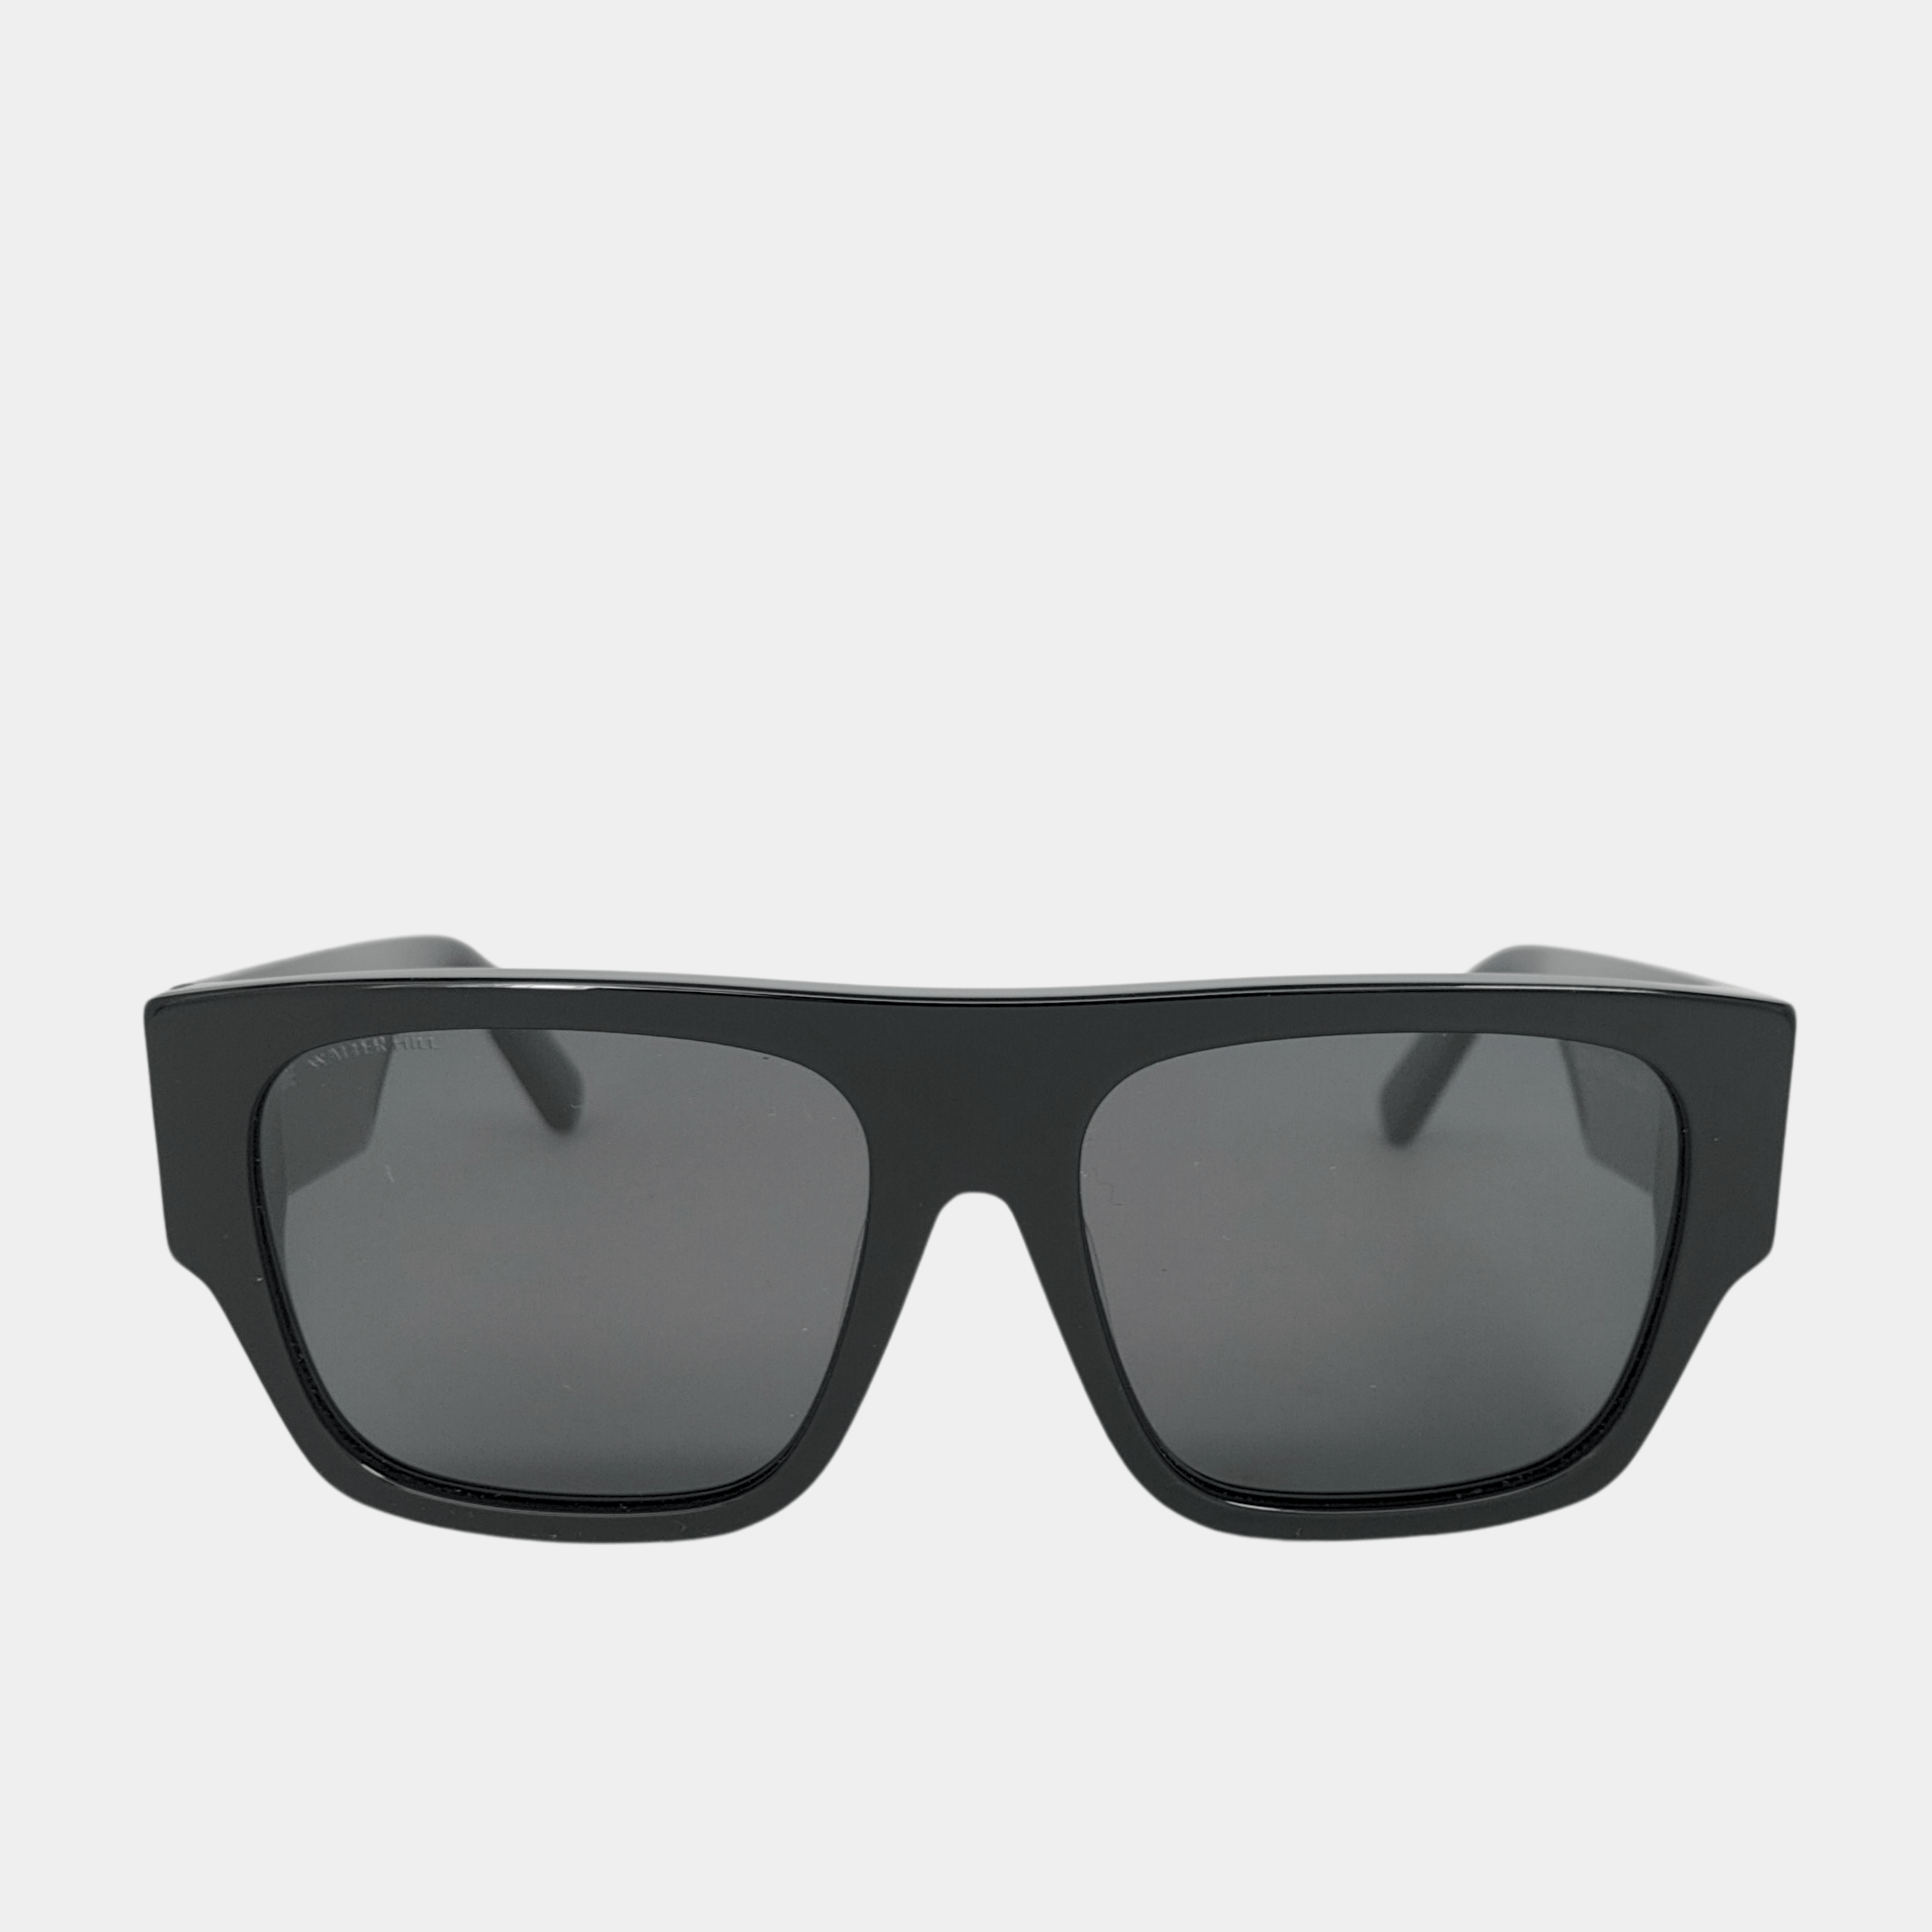 Walter Hill Sunglasses AZURE - Black